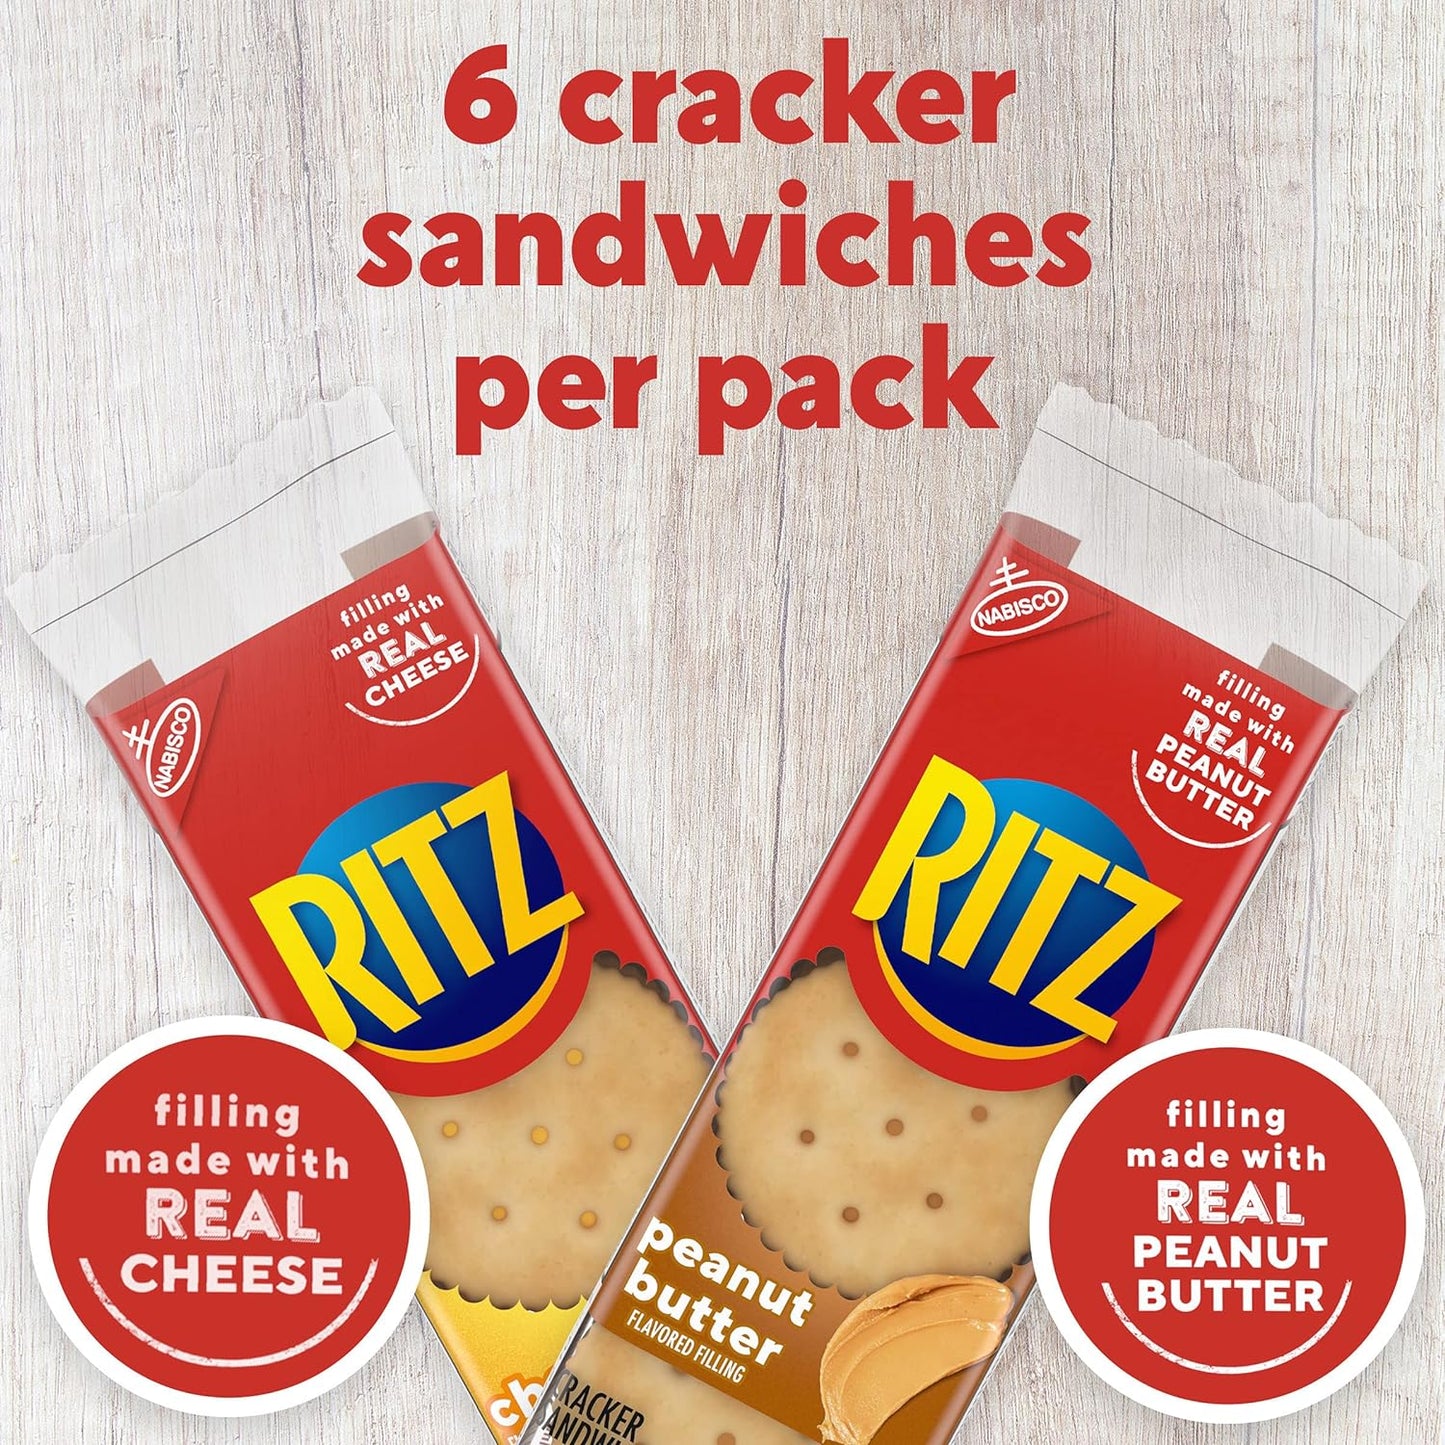 RITZ Peanut Butter Sandwich Cracker Snacks and Cheese Sandwich Crackers, Snack Crackers Variety Pack,, 32 Snack Packs